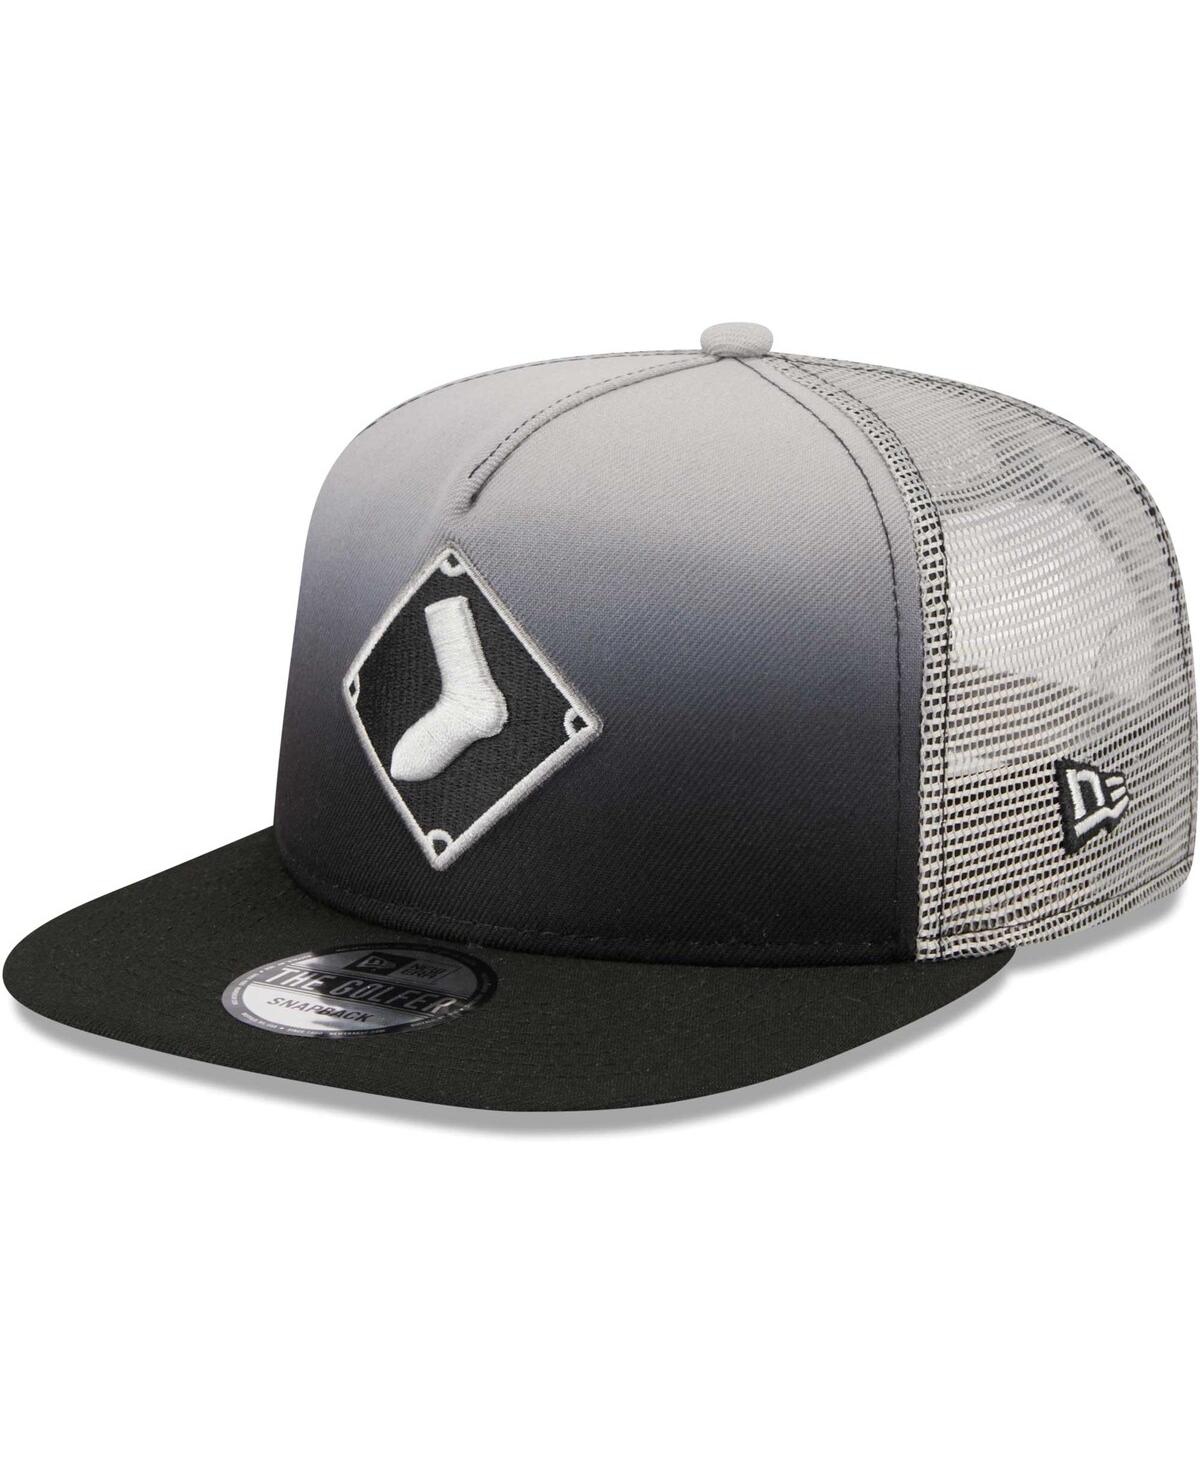 Chicago White Sox New Era Base Trucker 9FIFTY Snapback Hat - Black/White